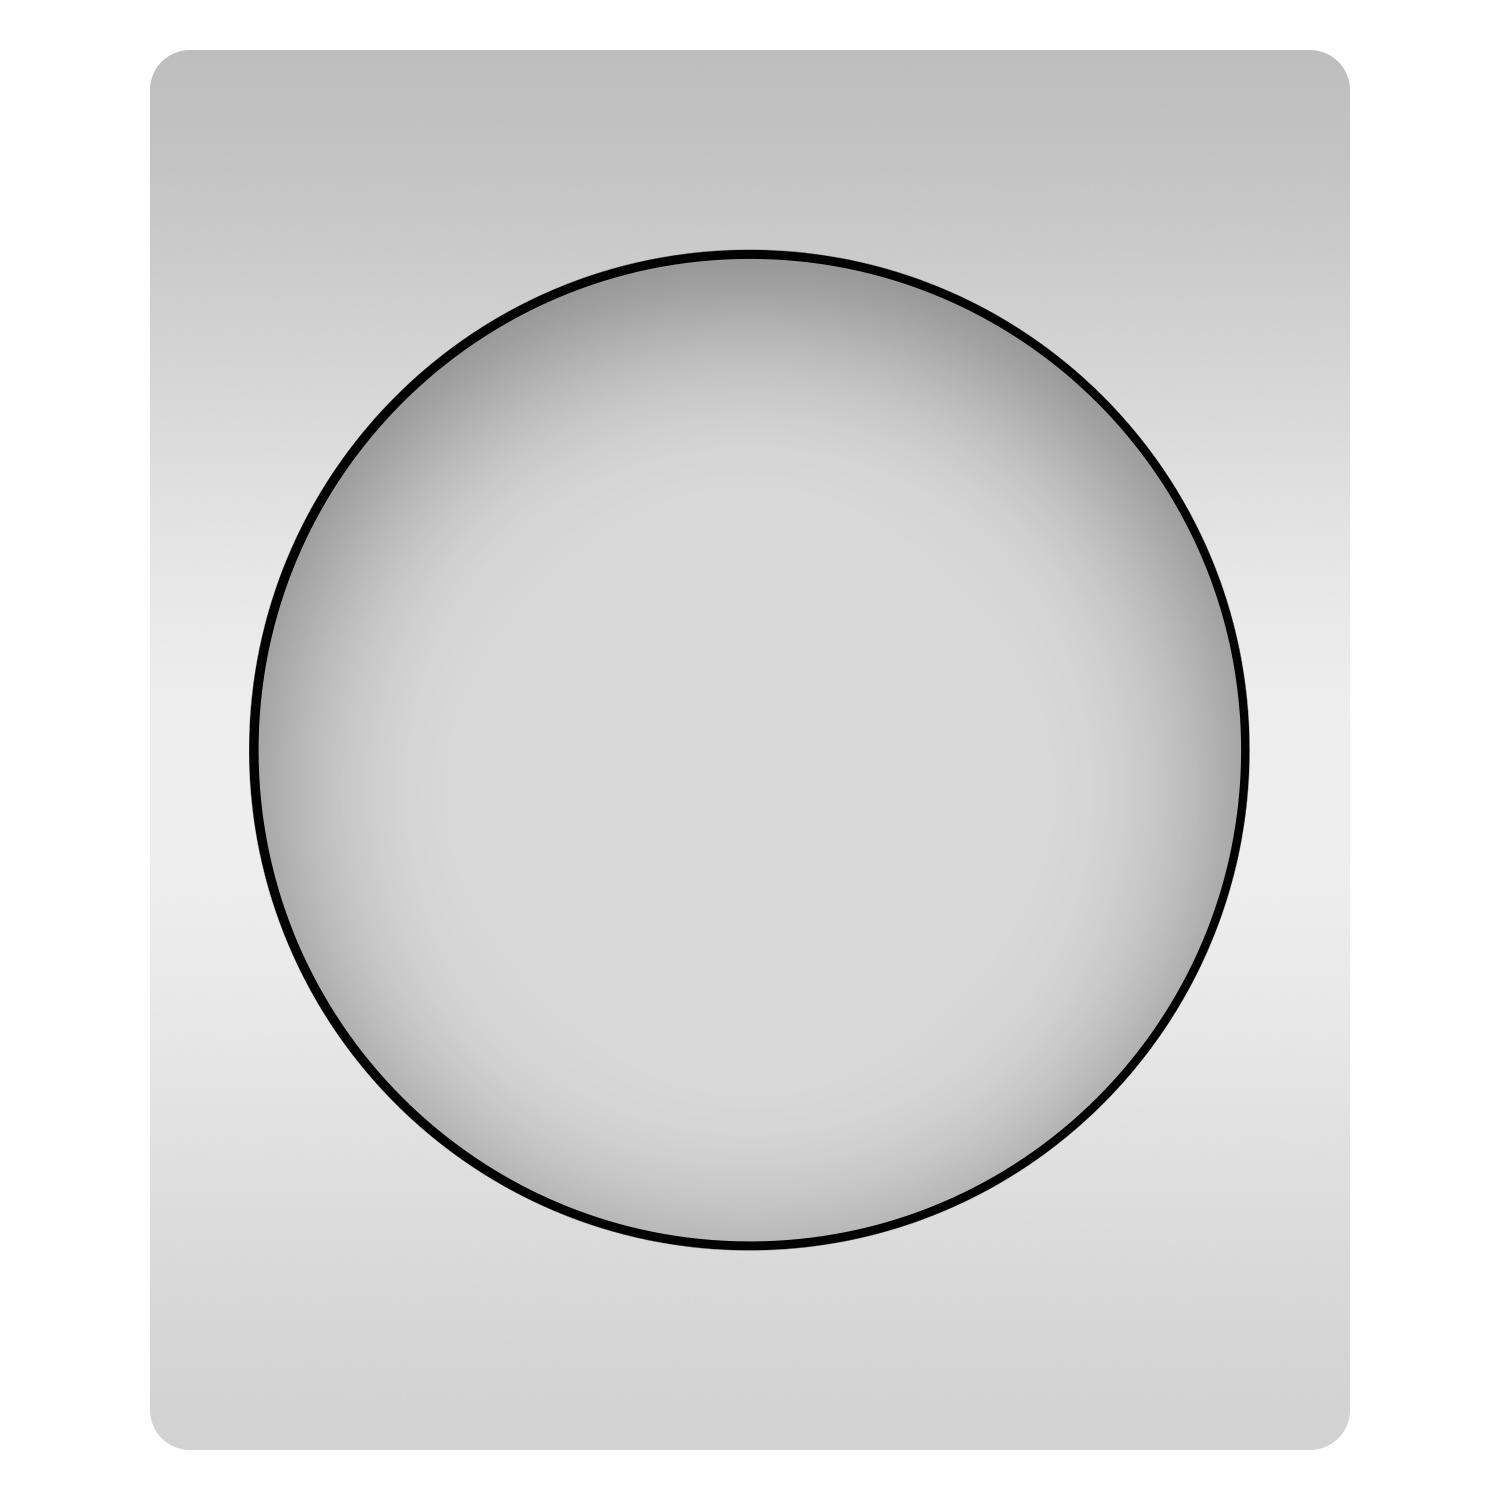 Влагостойкое круглое зеркало Wellsee 7 Rays' Spectrum 172200060, 80 см